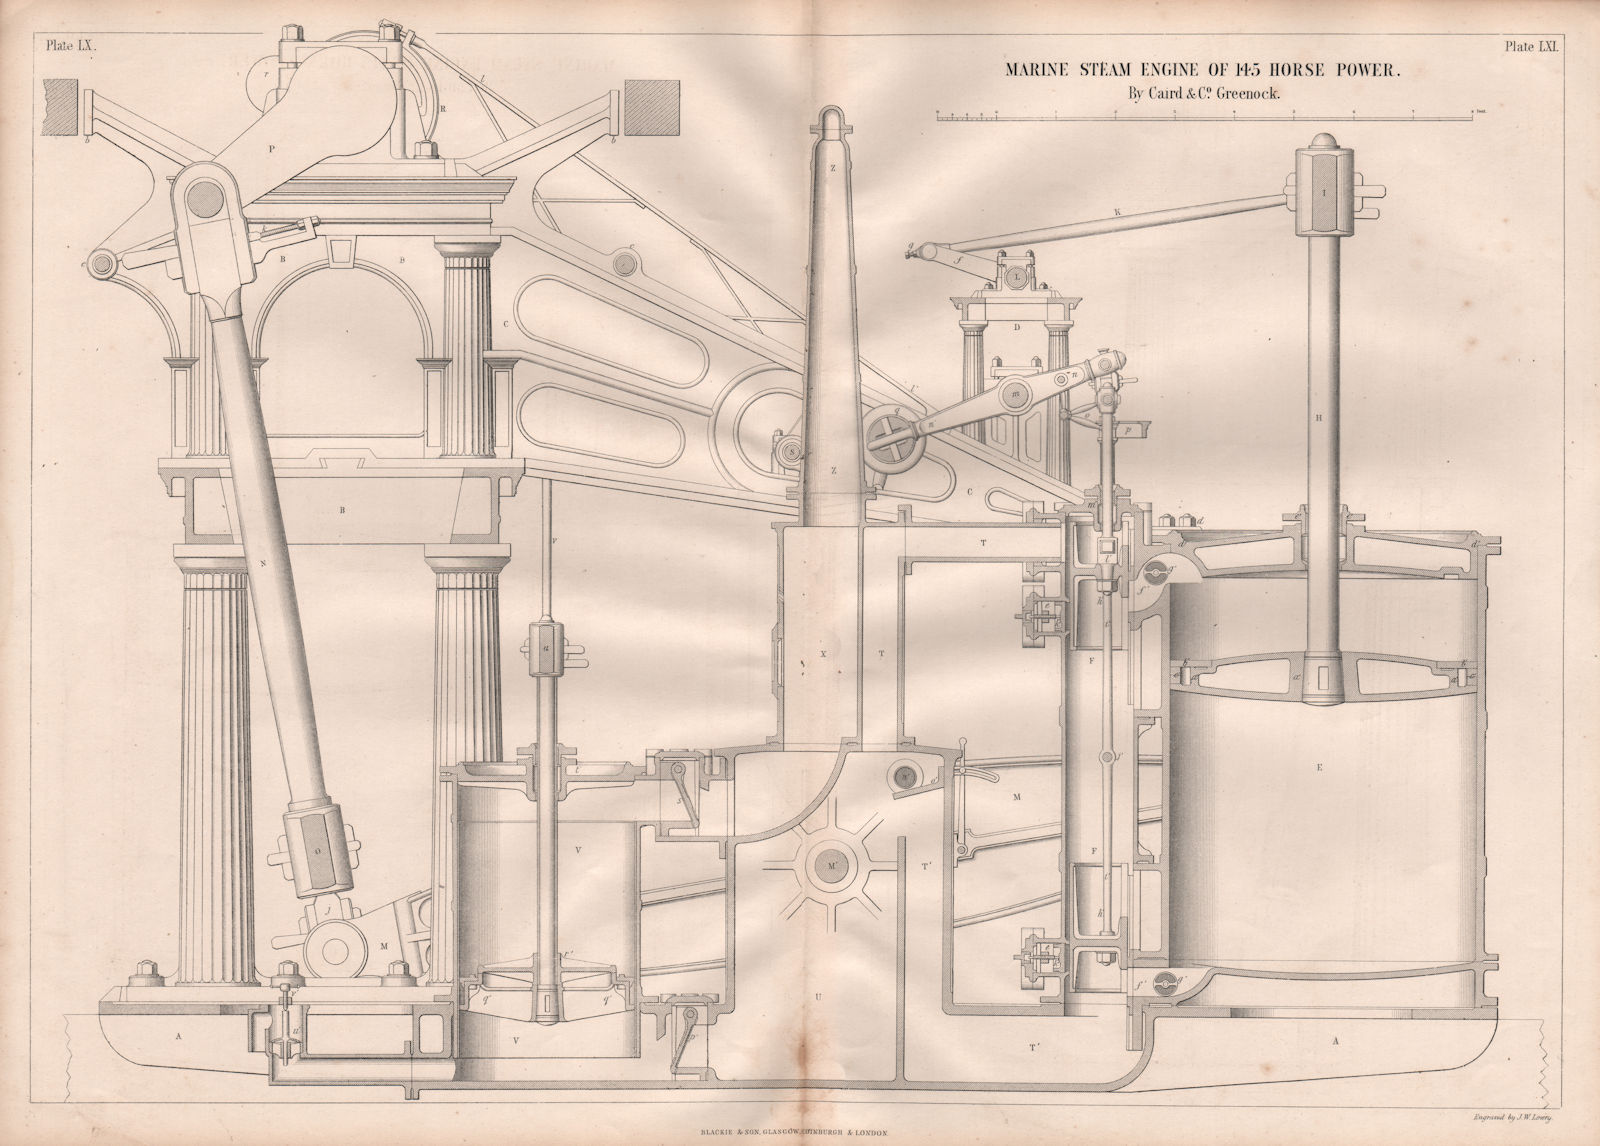 19C ENGINEERING DRAWING. 145 HP marine steam engine. Caird & Co. Greenock 3 1847